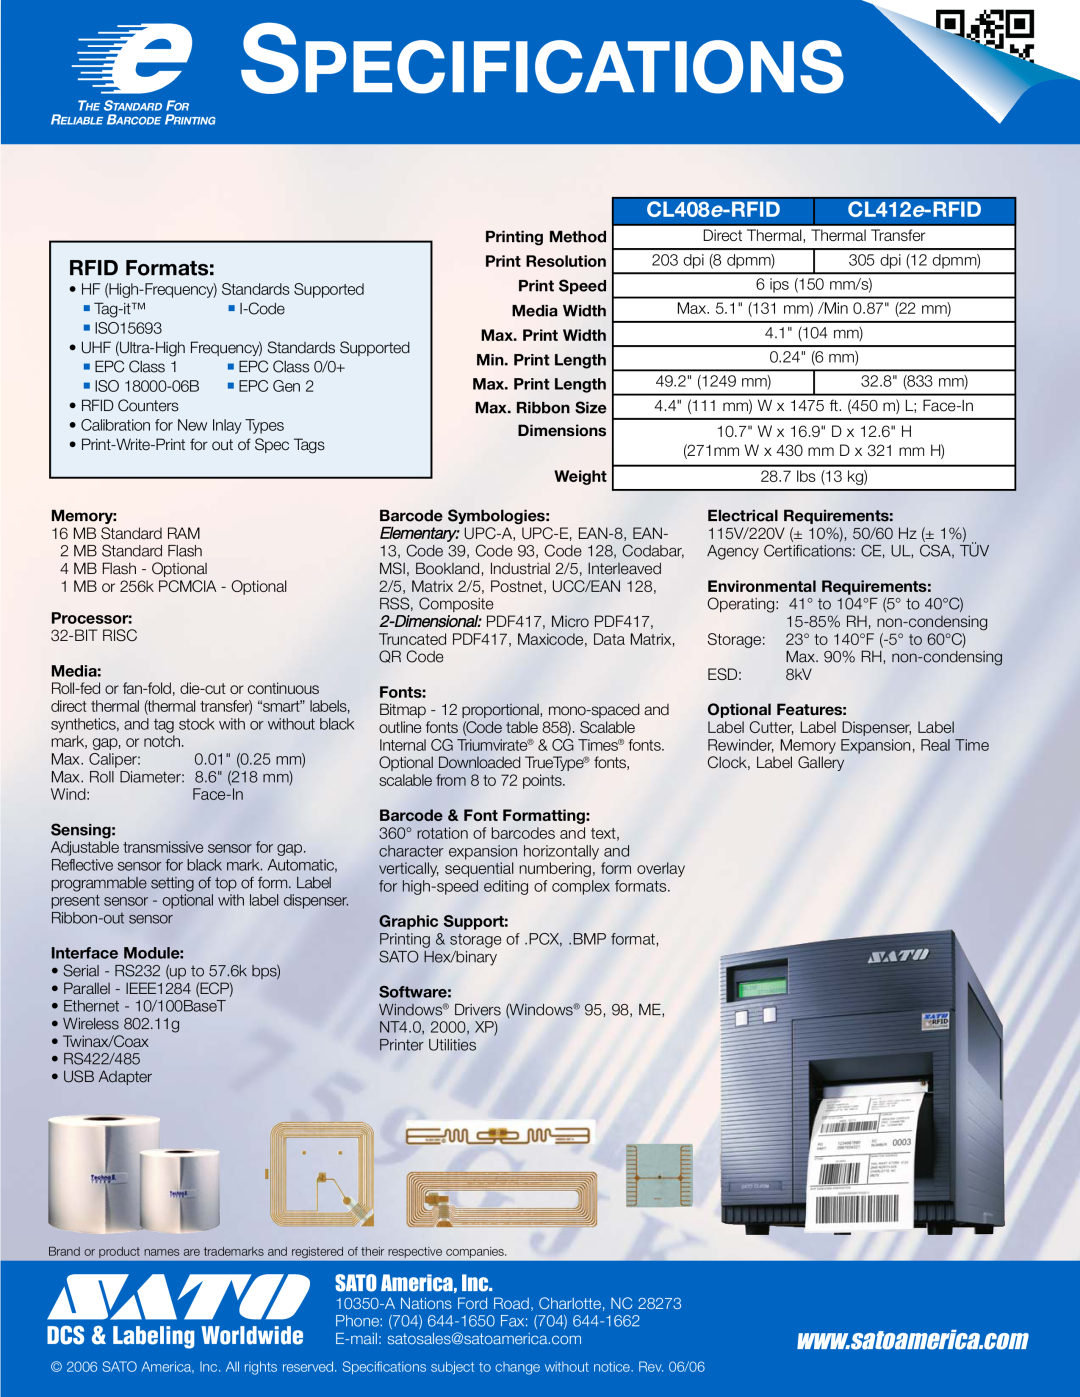 SATO CLe RFID manual RFID Formats, Specifications, CL408e-RFID, CL412e-RFID, SATO America, Inc, Tag-it, dpi 12 dpmm 